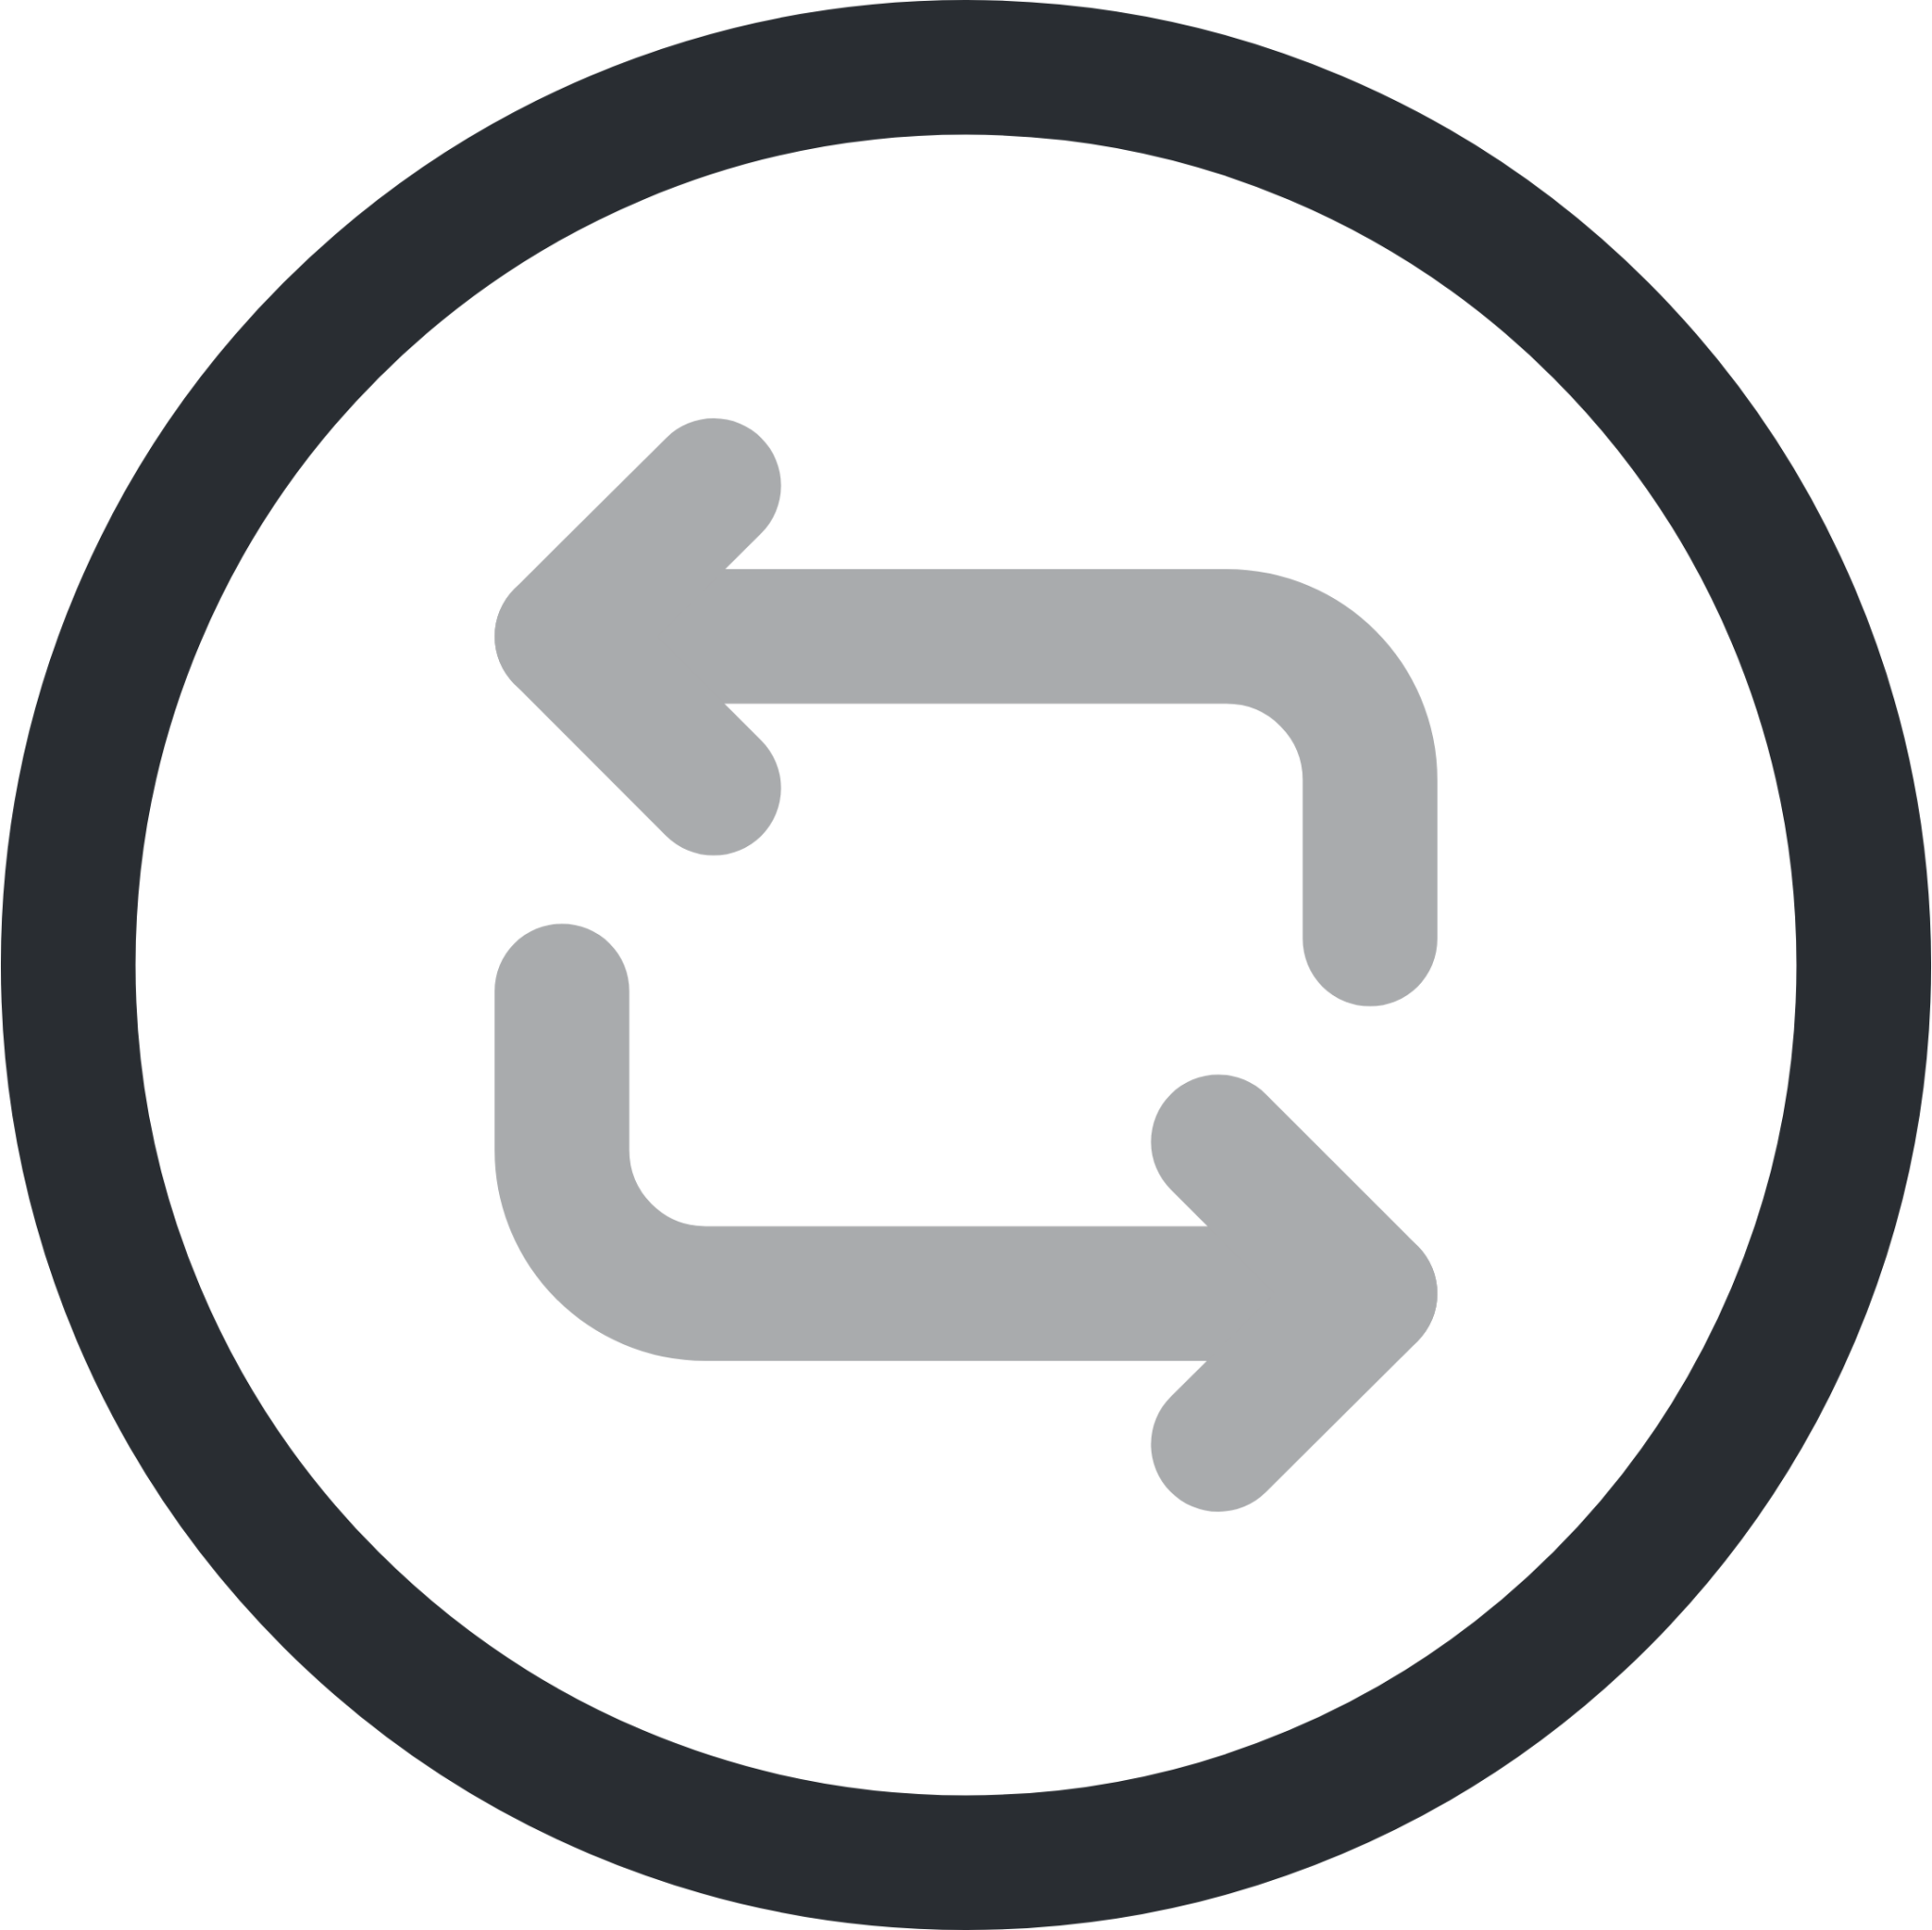 repeat circle icon